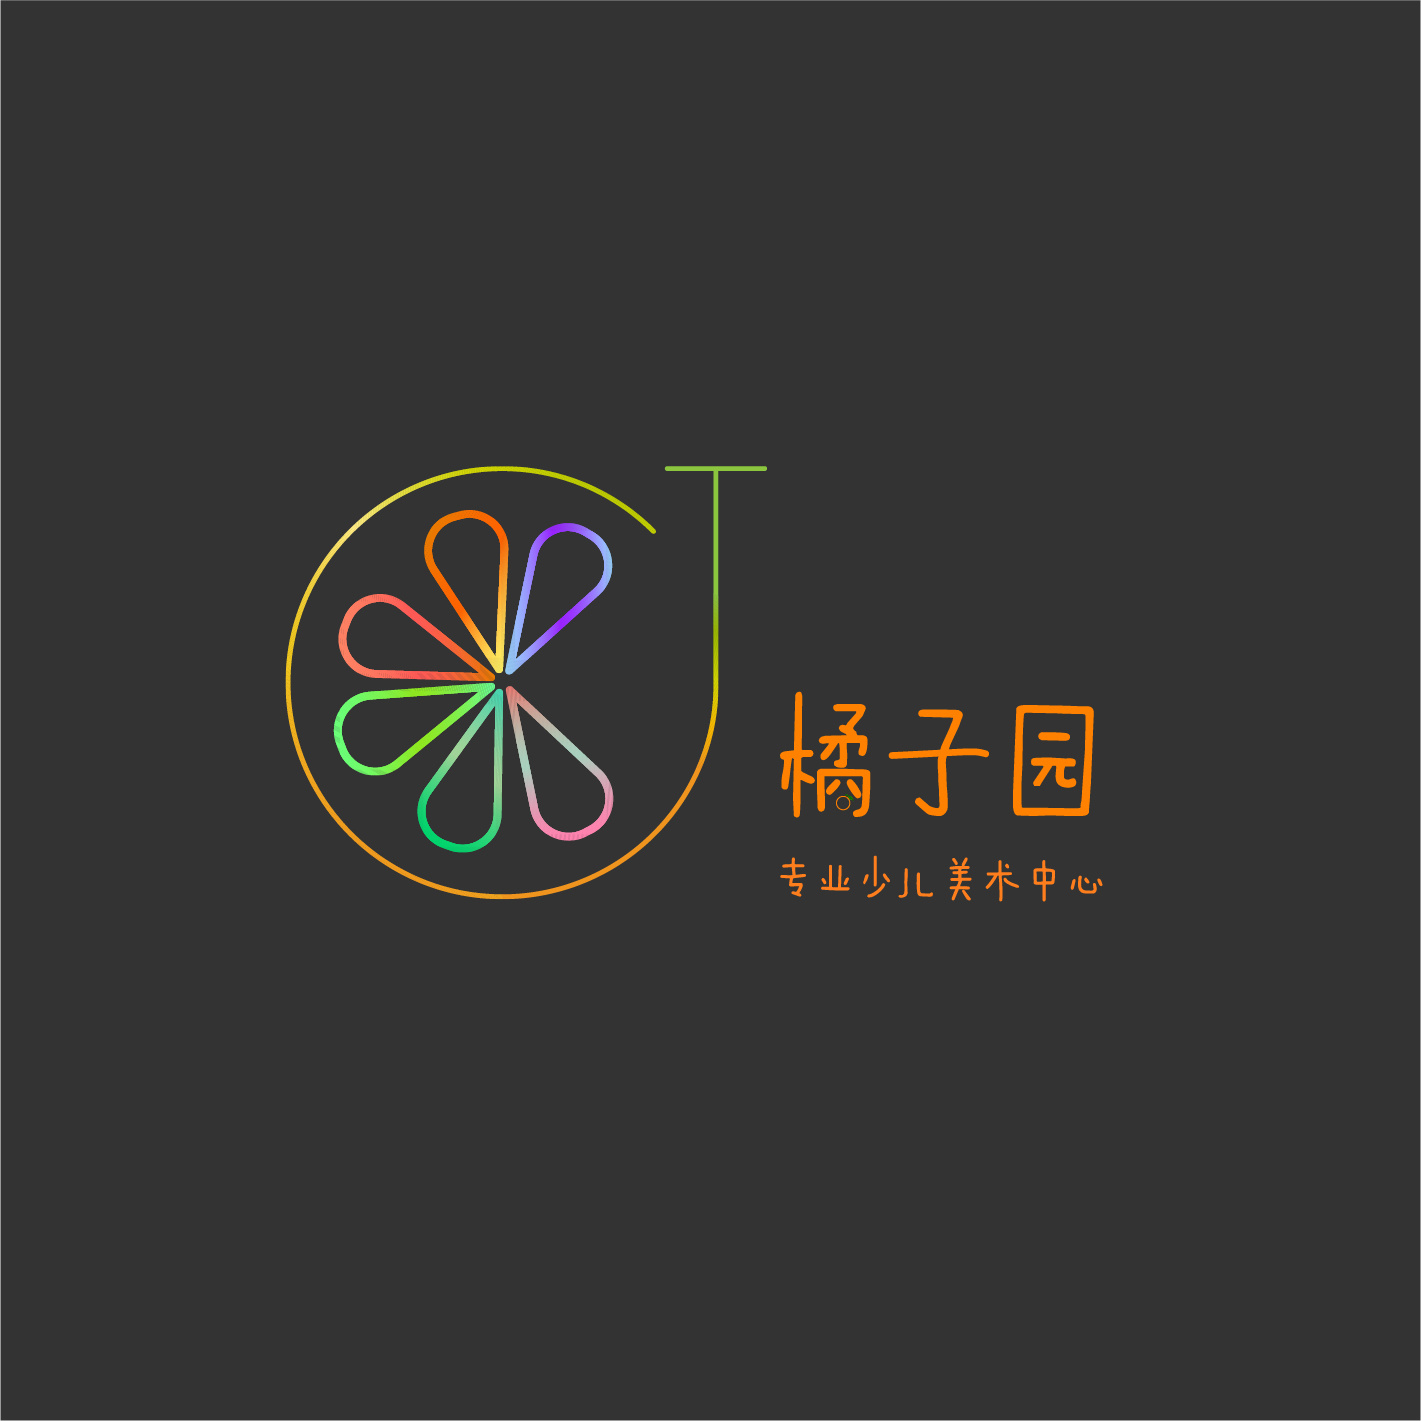 logo儿童美术培训机构|平面|标志|吕潇潇 - 原创